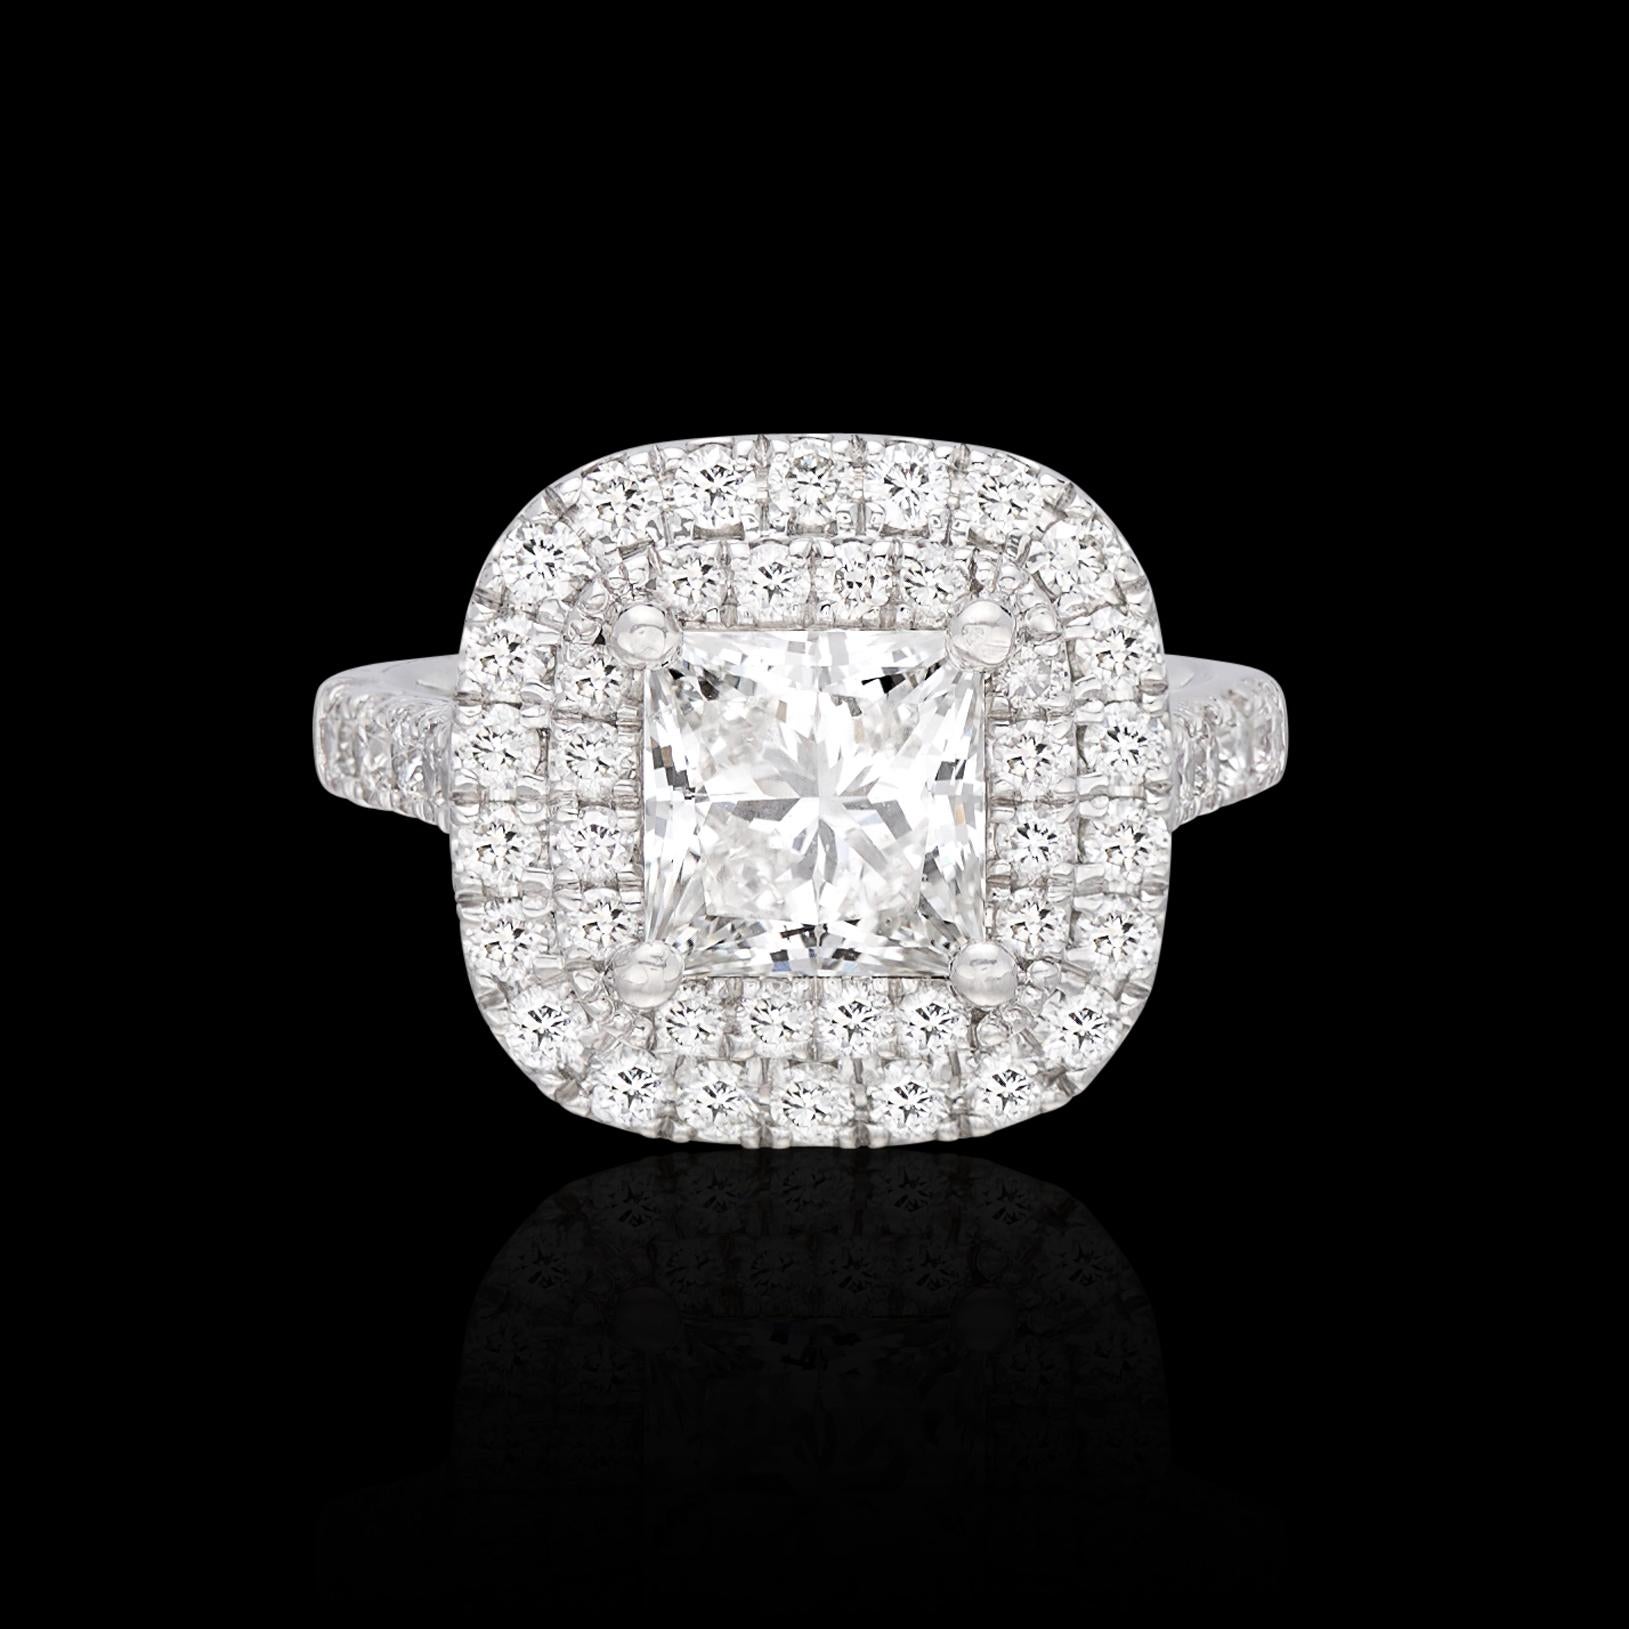 Phenomenal 3.22cttw Princess Cut Diamond Ring For Sale 4